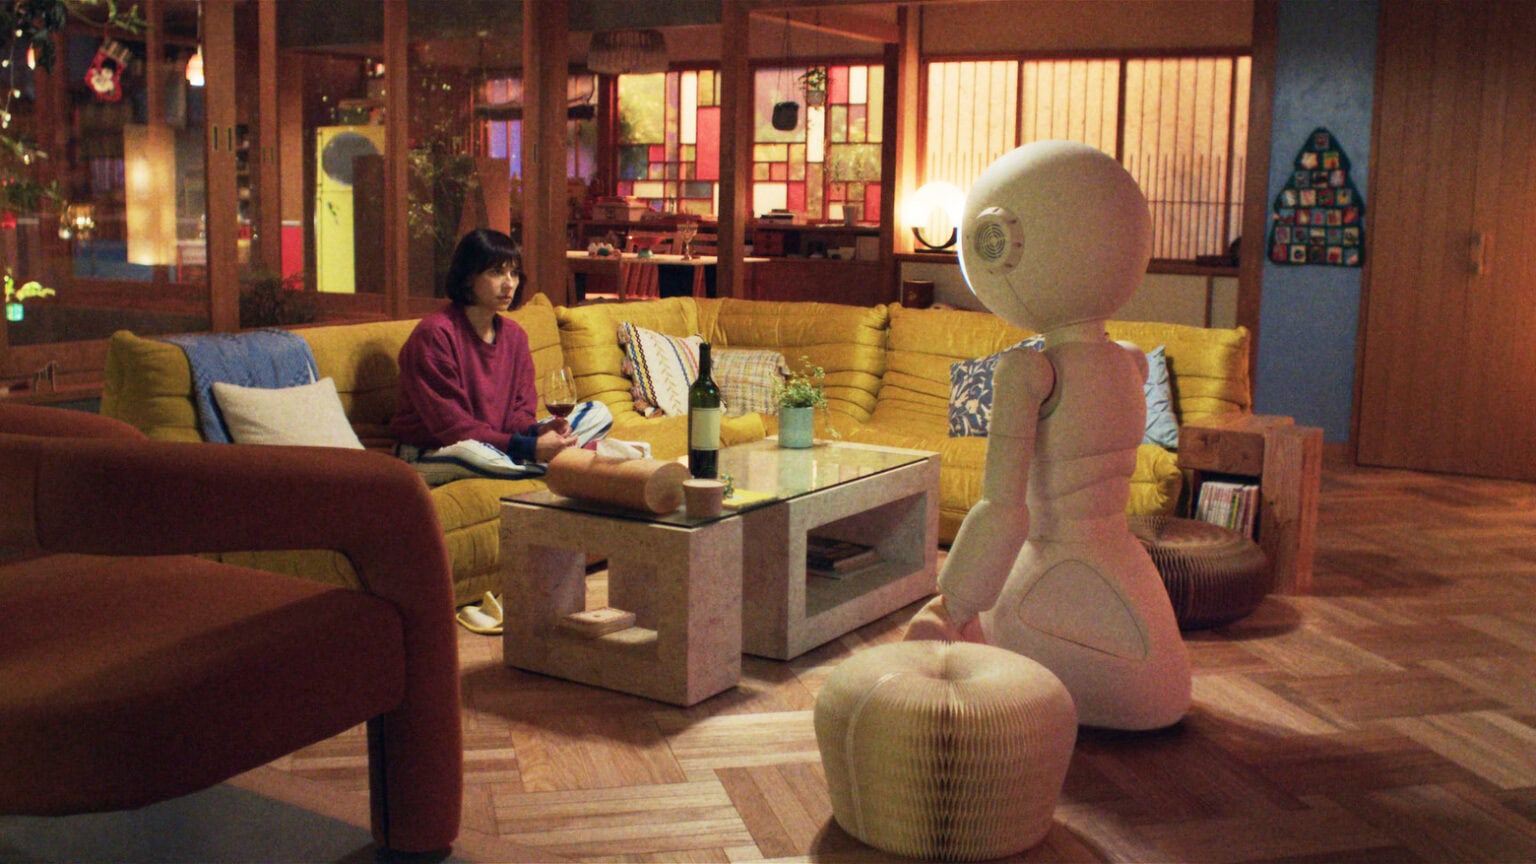 Apple TV+ mystery thriller 'Sunny' stars Rashida Jones and a robot